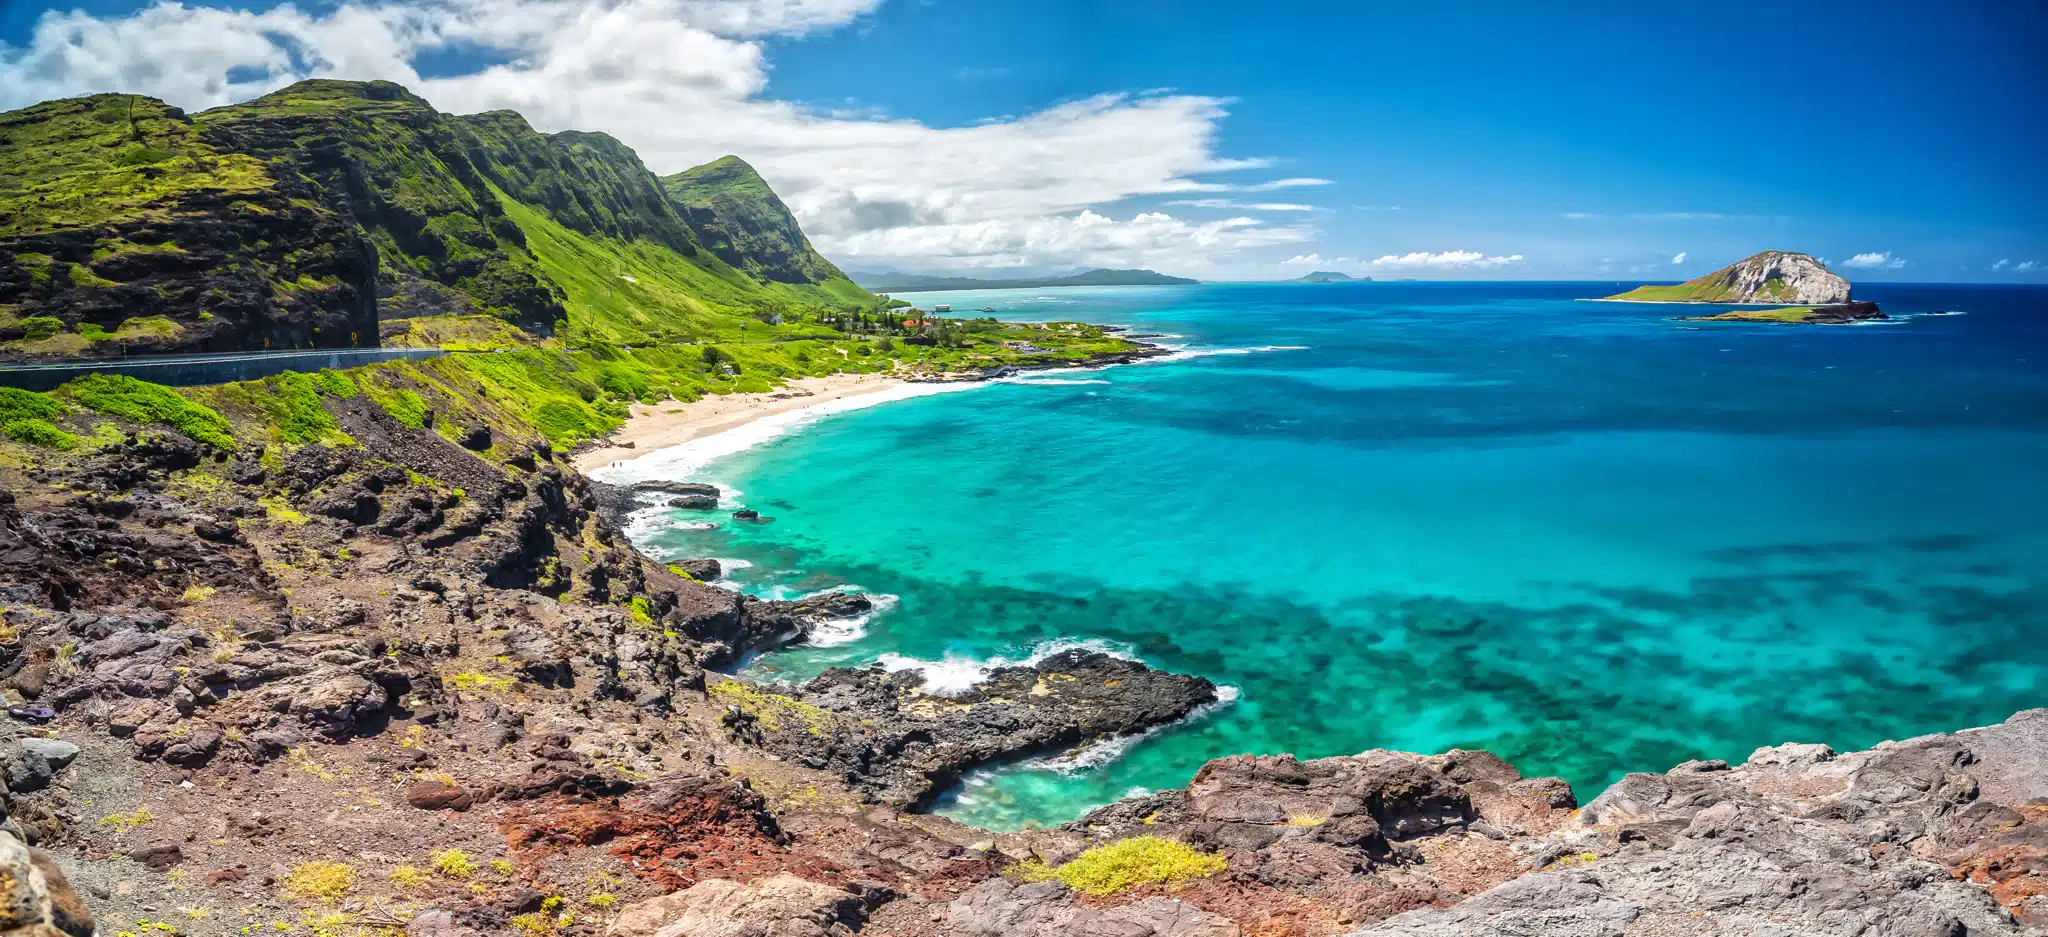 Makapu'u Beach Park is a Beach located in the city of Waimanalo on Oahu, Hawaii